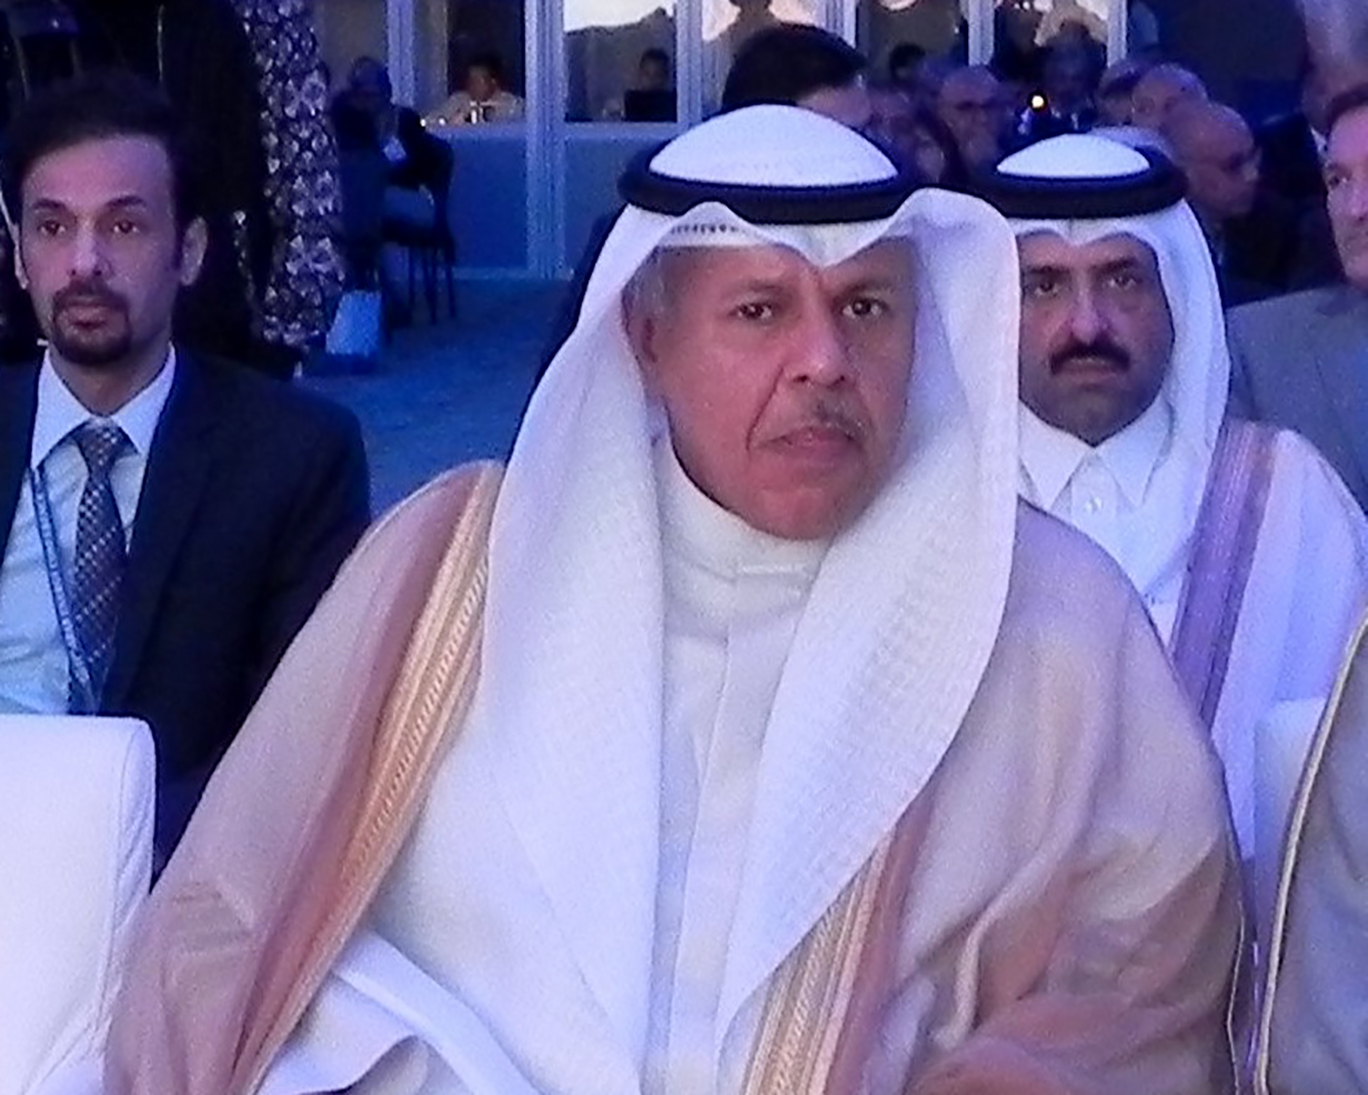 Kuwaiti ambassador to Morocco Abdulatif Al-Yahya